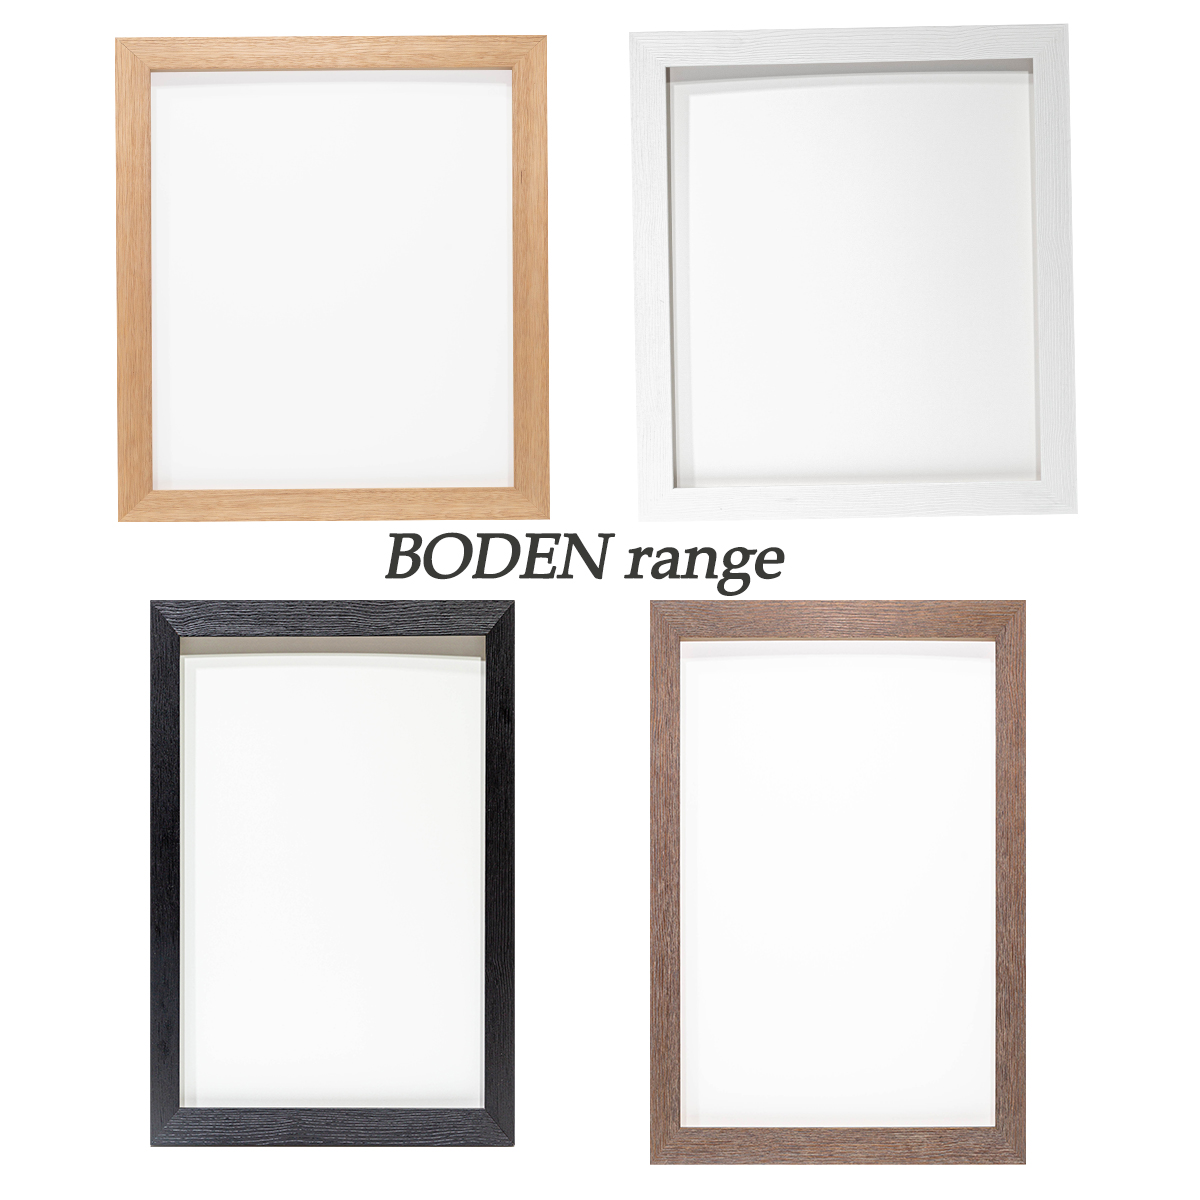 BODEN range wood grain picture frames, sizes from A4 | bodrange.jpg